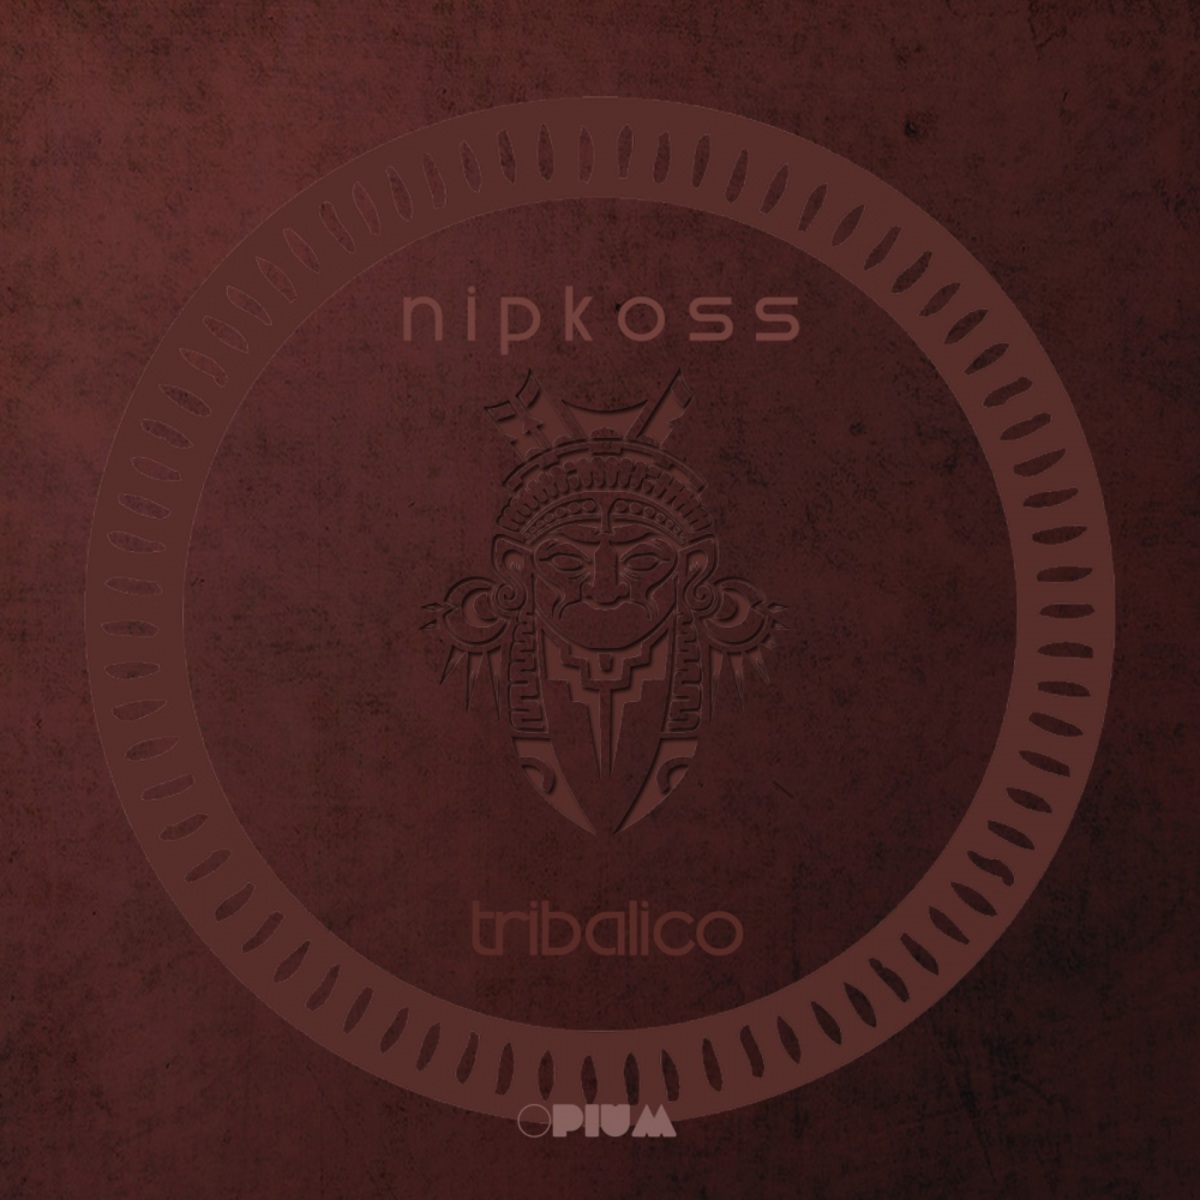 Nipkoss - Tribalico / Opium Muzik